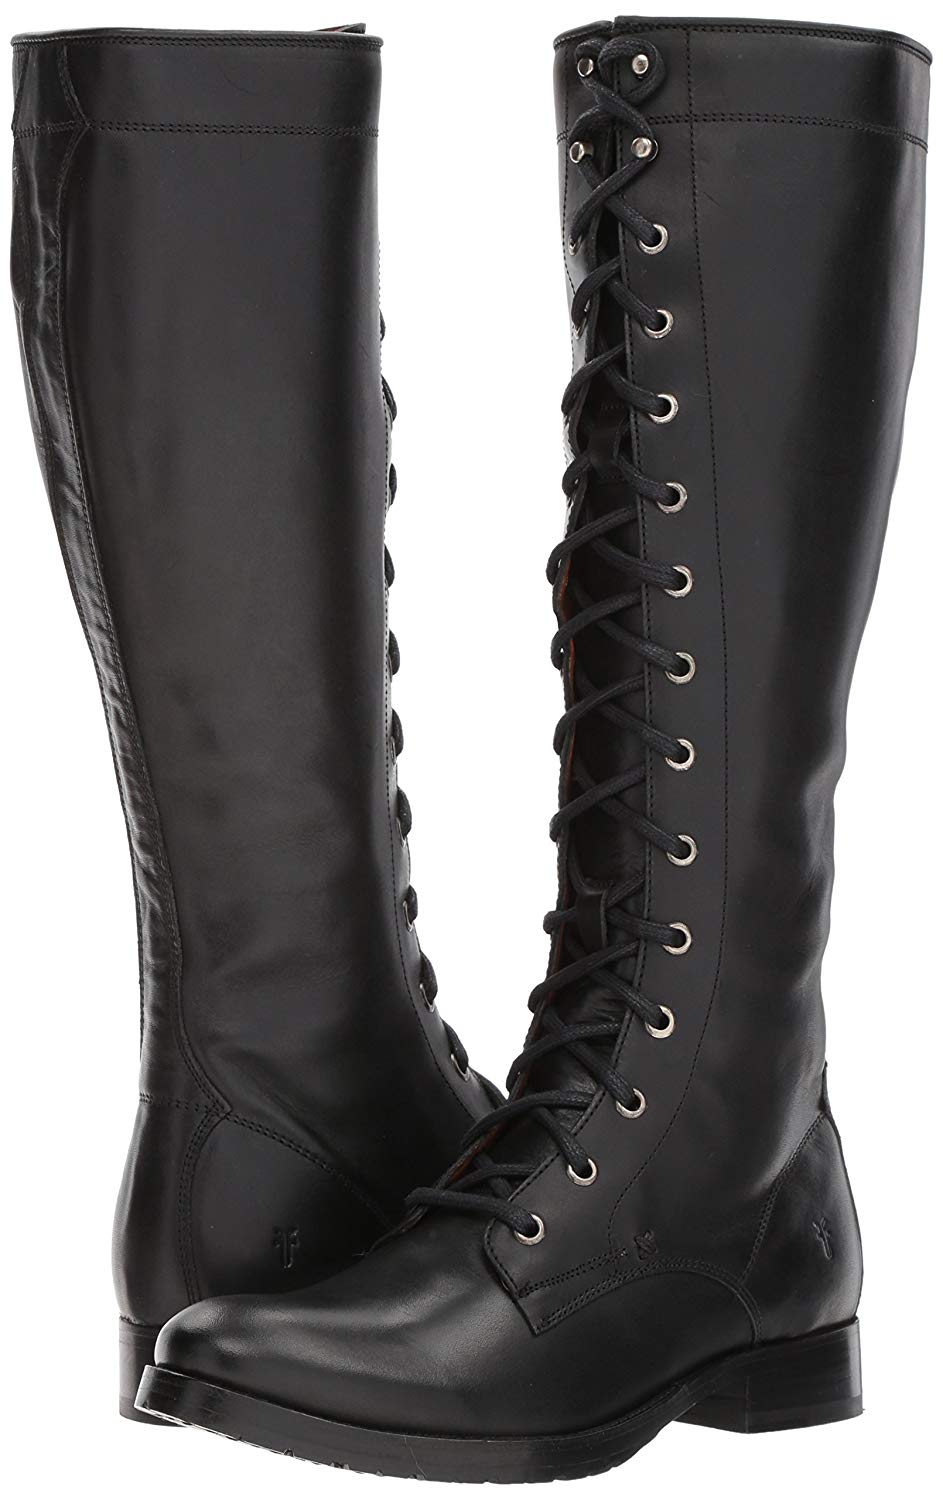 FRYE Women's Melissa Tall Lace Boot, Black, Size 7.5 R4Pf | eBay